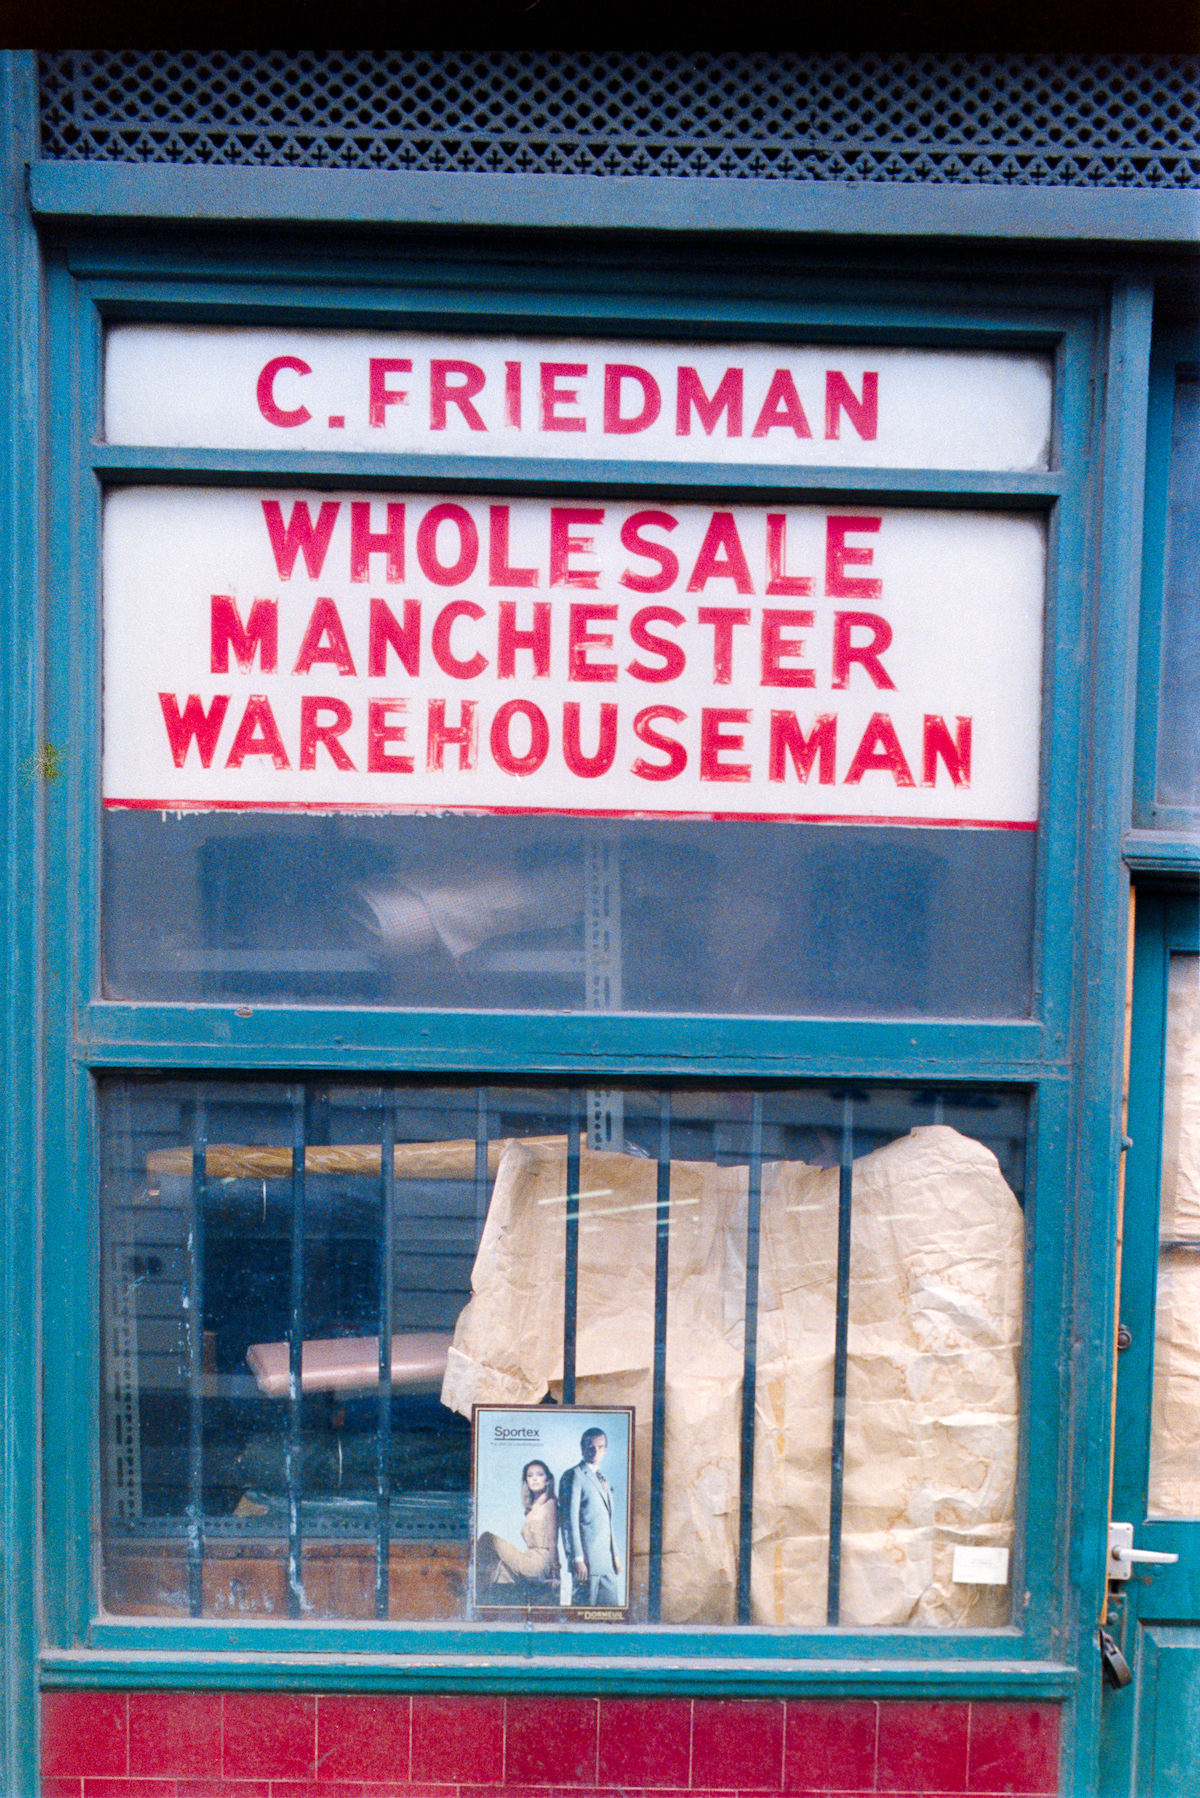 C Friedman, Wholesale, Manchester, Warehouseman, Commercial Road, Spitalfields, Tower Hamlets, 1986